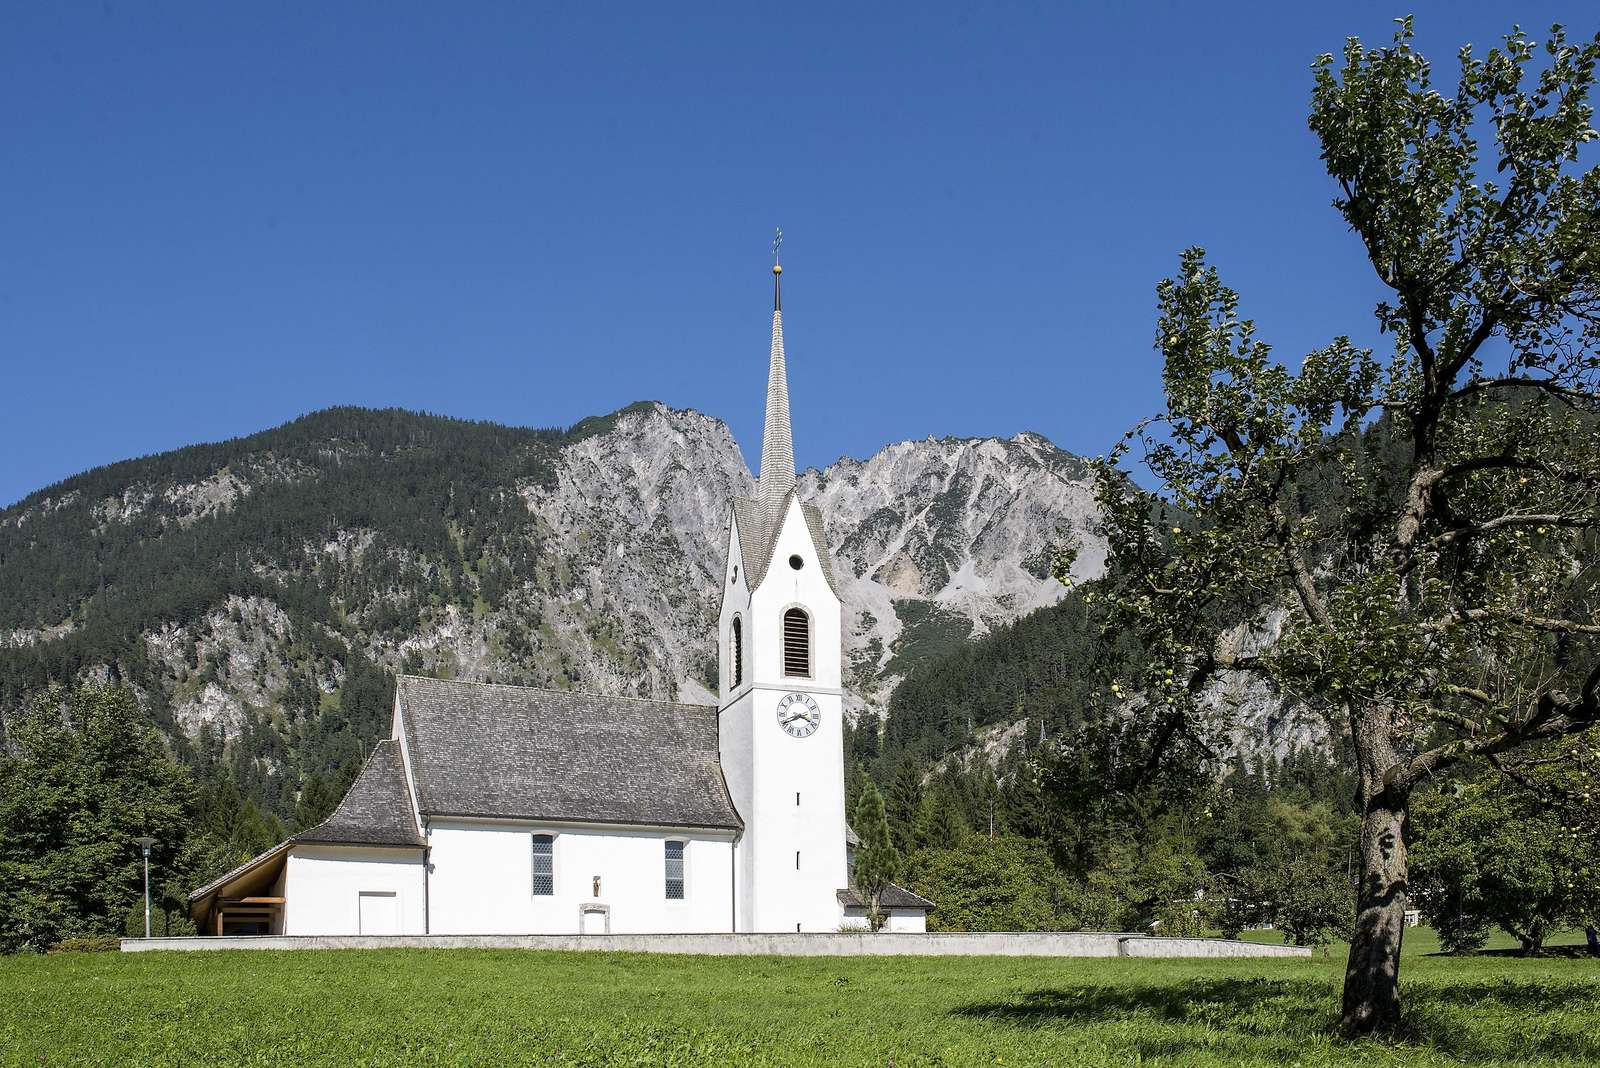 St Anton Arlberg Tirol Austria puzzle online